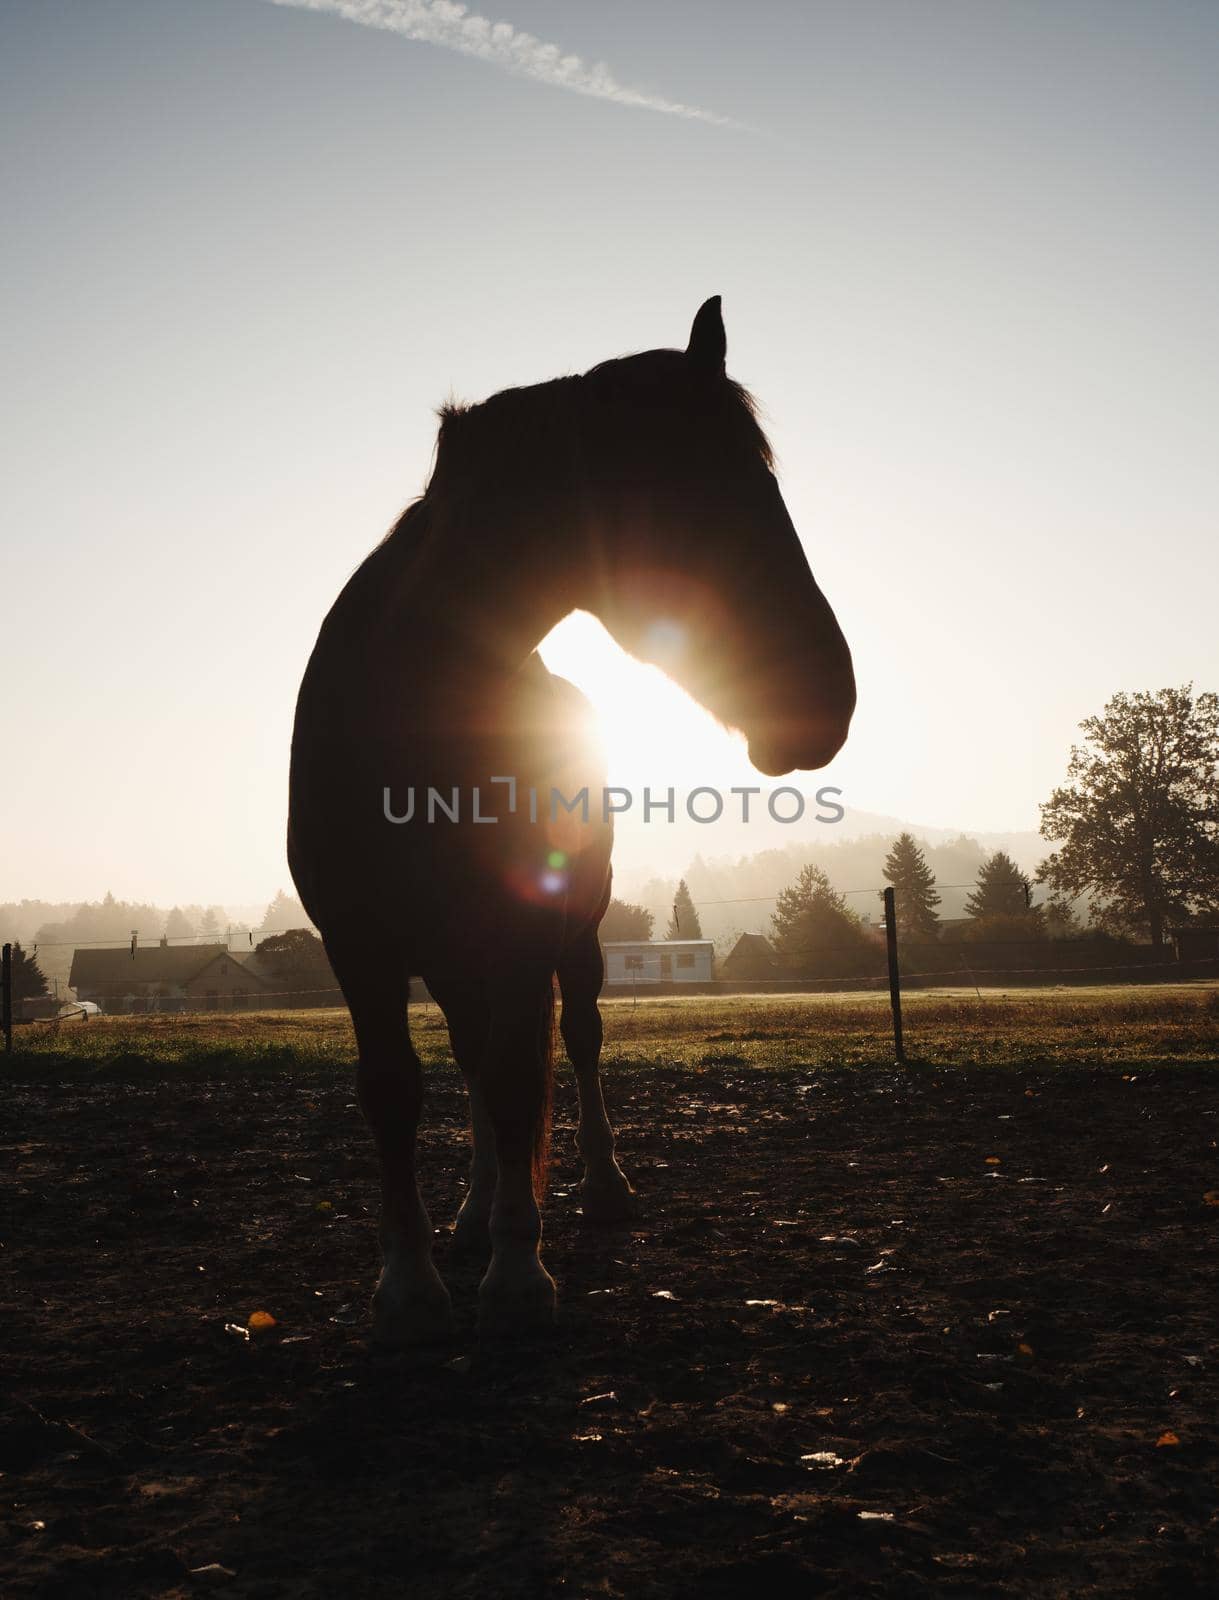 Cute calm horse in morning sunlight by rdonar2